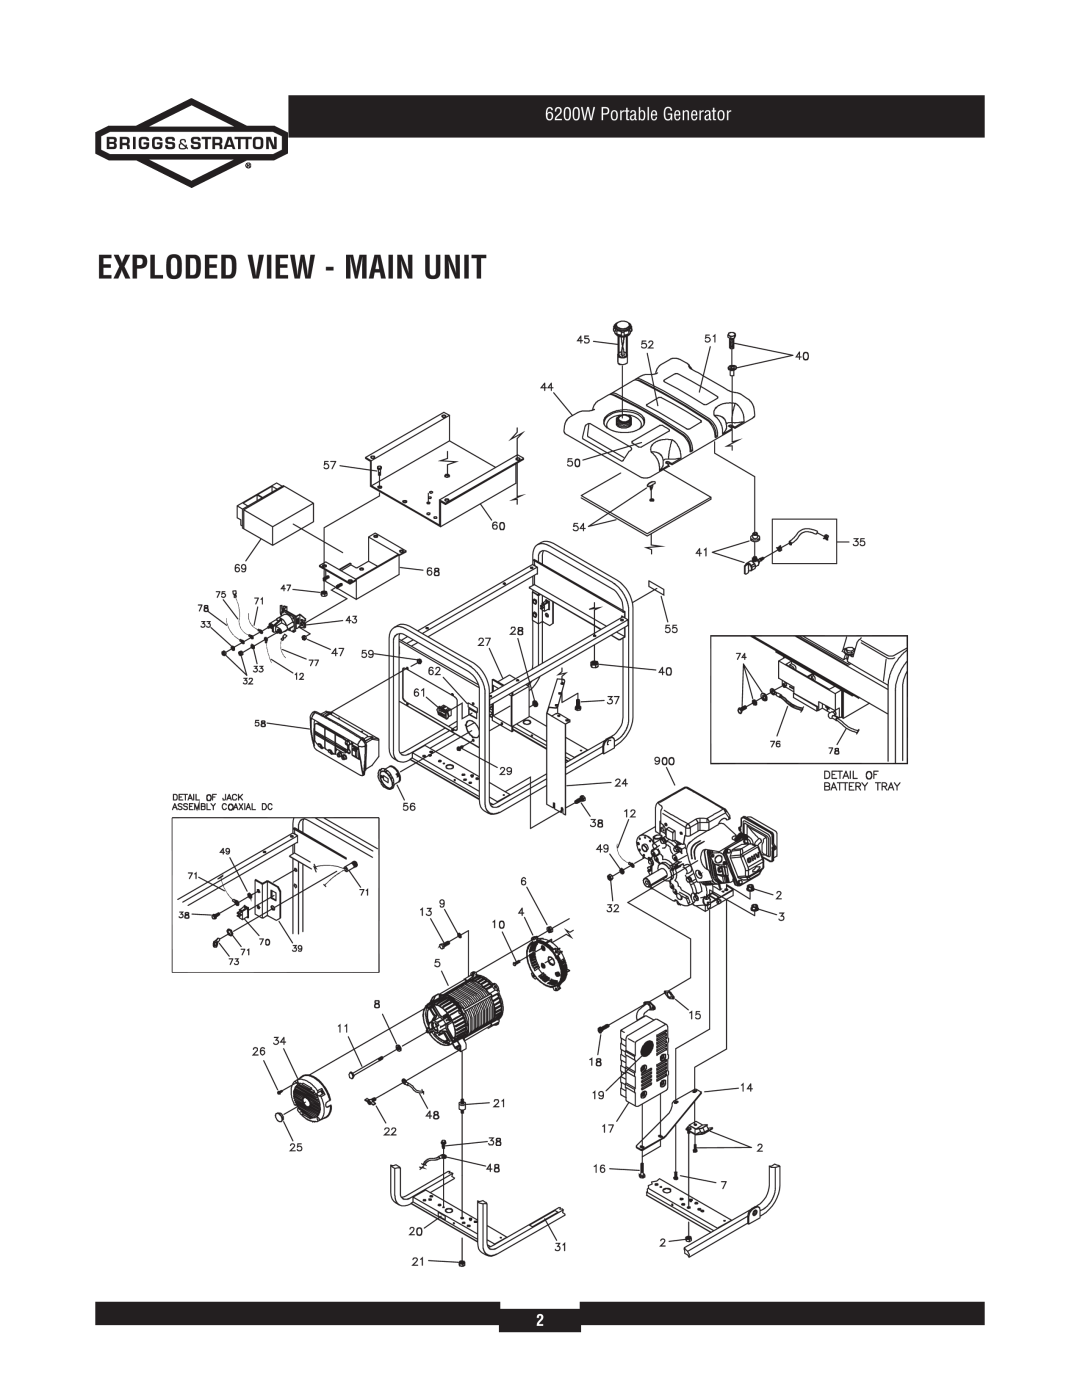 Briggs & Stratton 30358 manual Exploded View - Main Unit, 6200W Portable Generator 